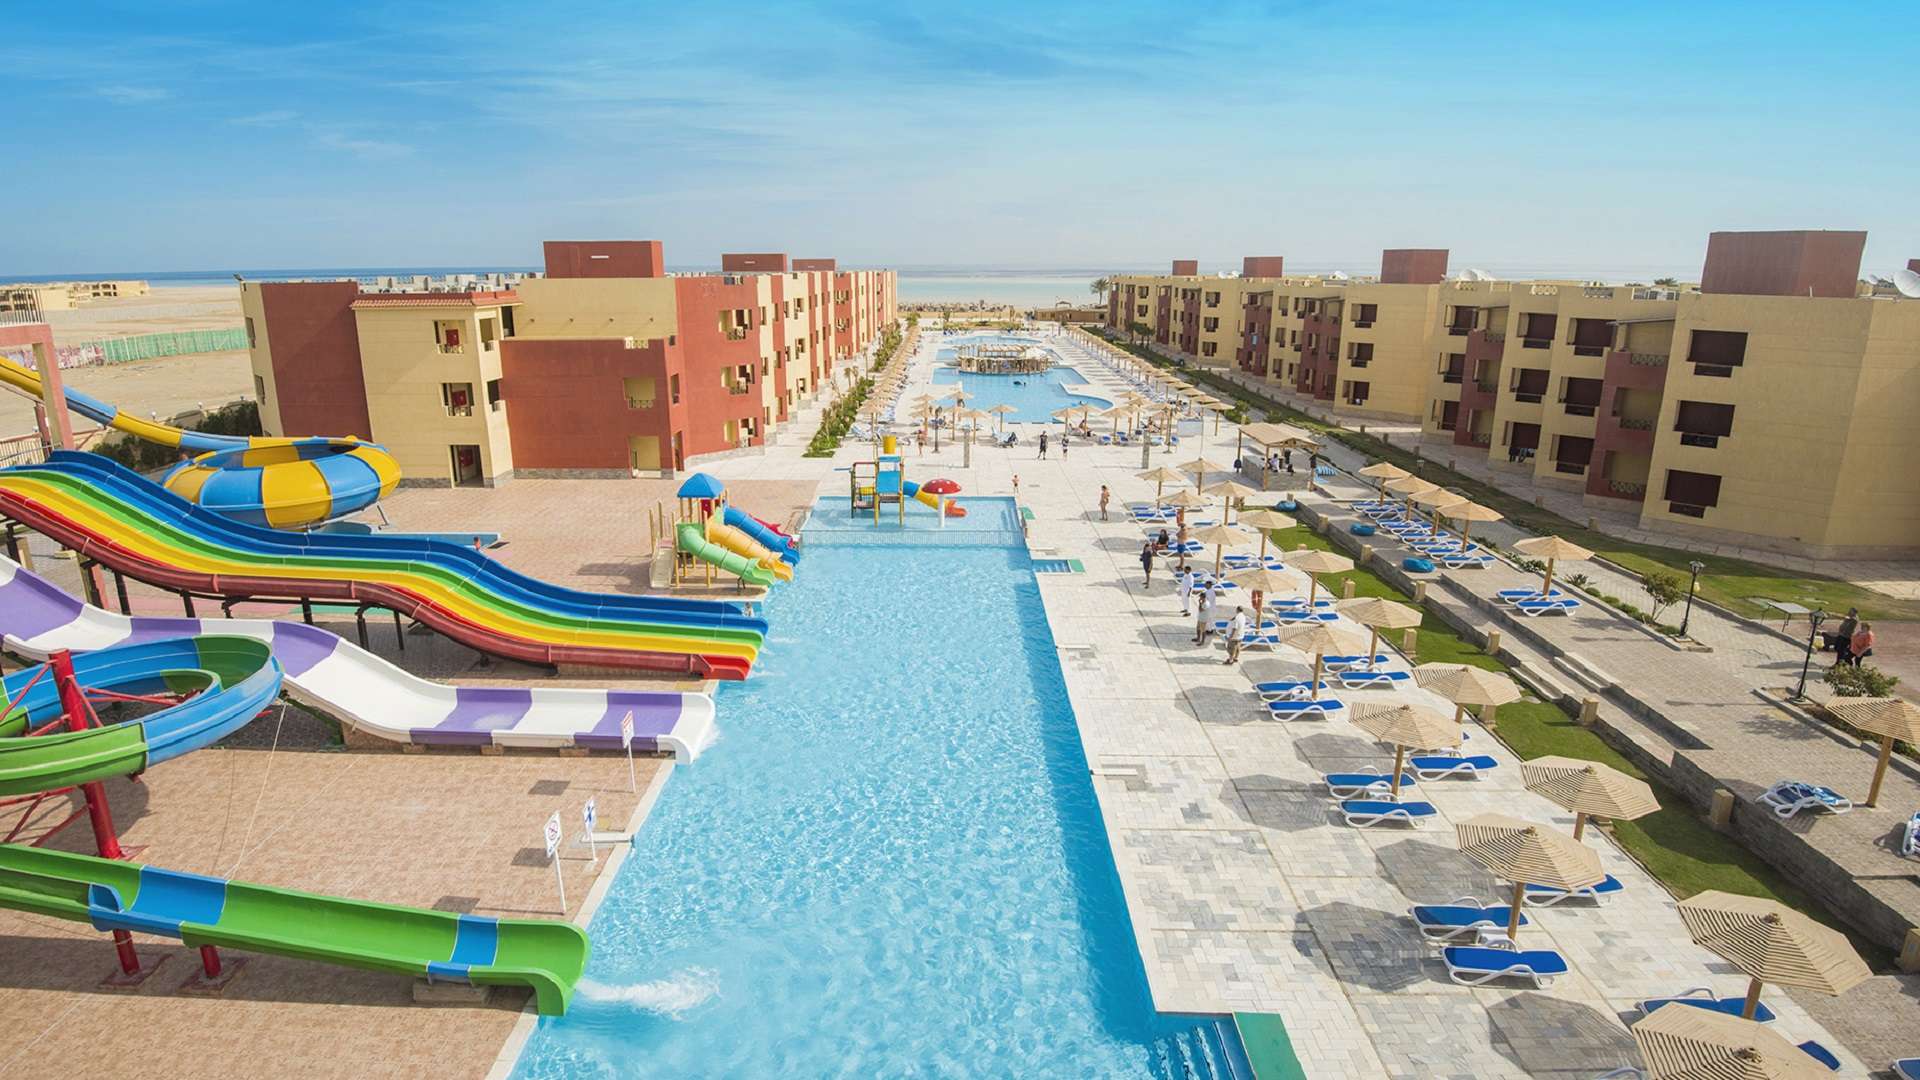 Royal Tulip Beach Resort Egipt Marsa Alam - opis oferty - Fly.pl